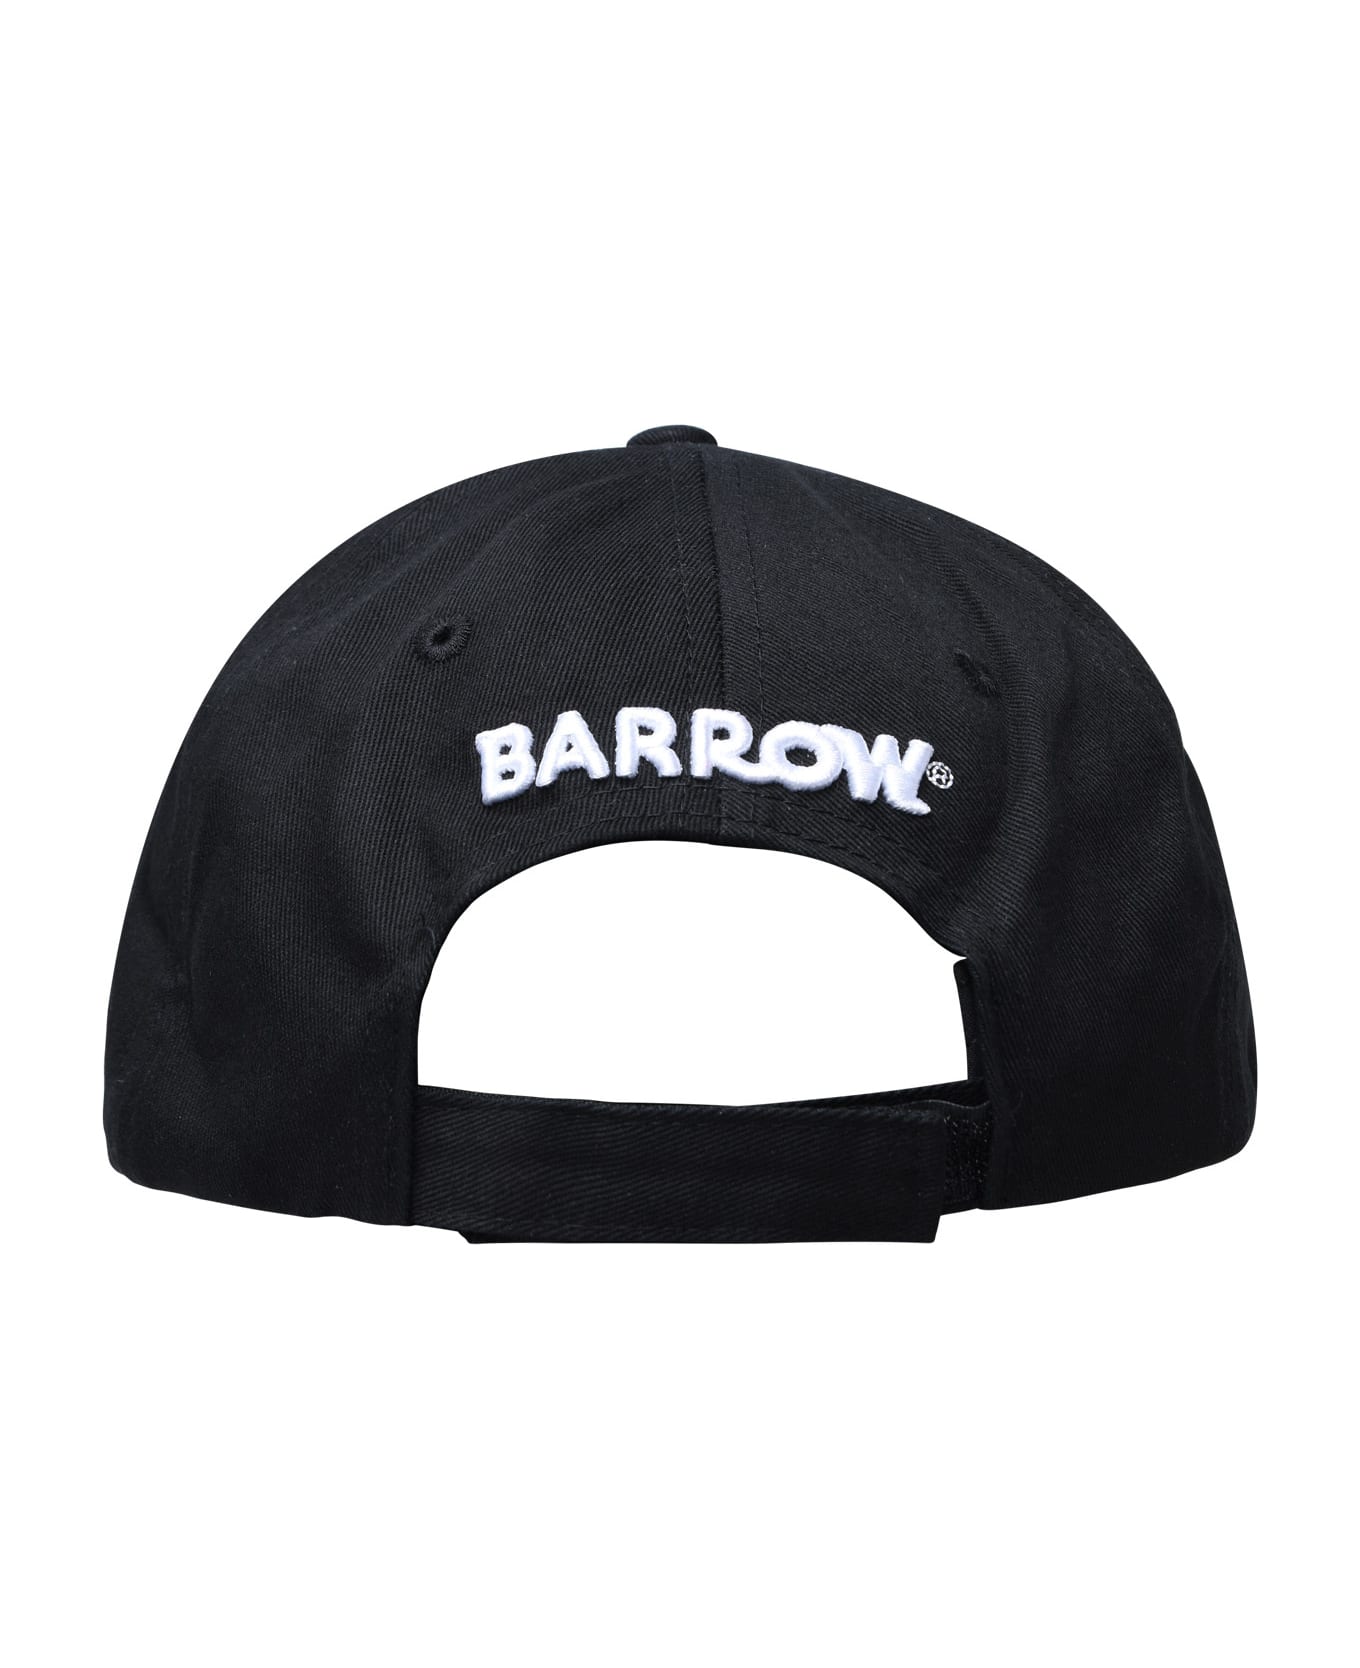 Barrow Black Cotton Hat - Nero